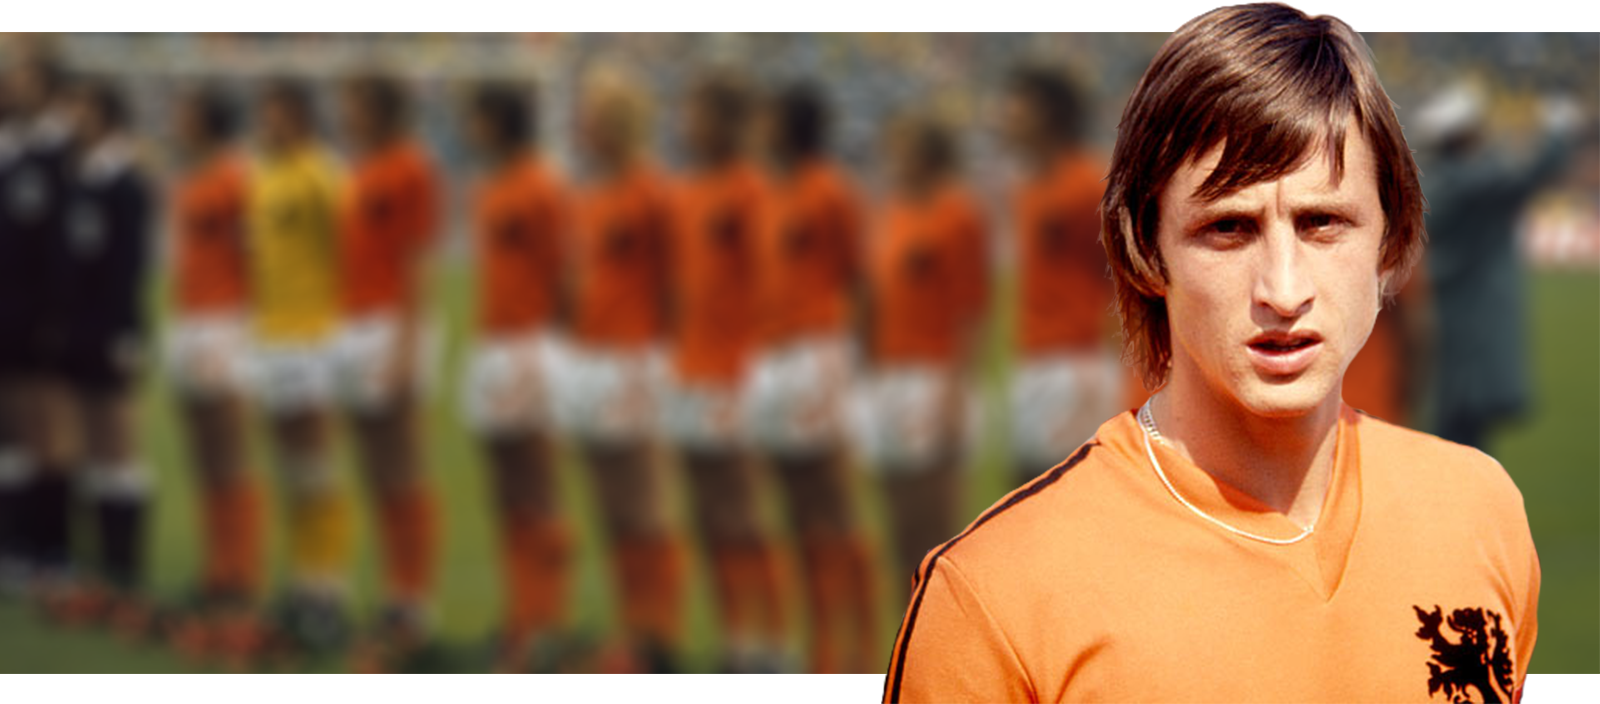 Йохан Кройфф, сборная Нидерландов по футболу, Аякс, Барселона, фото